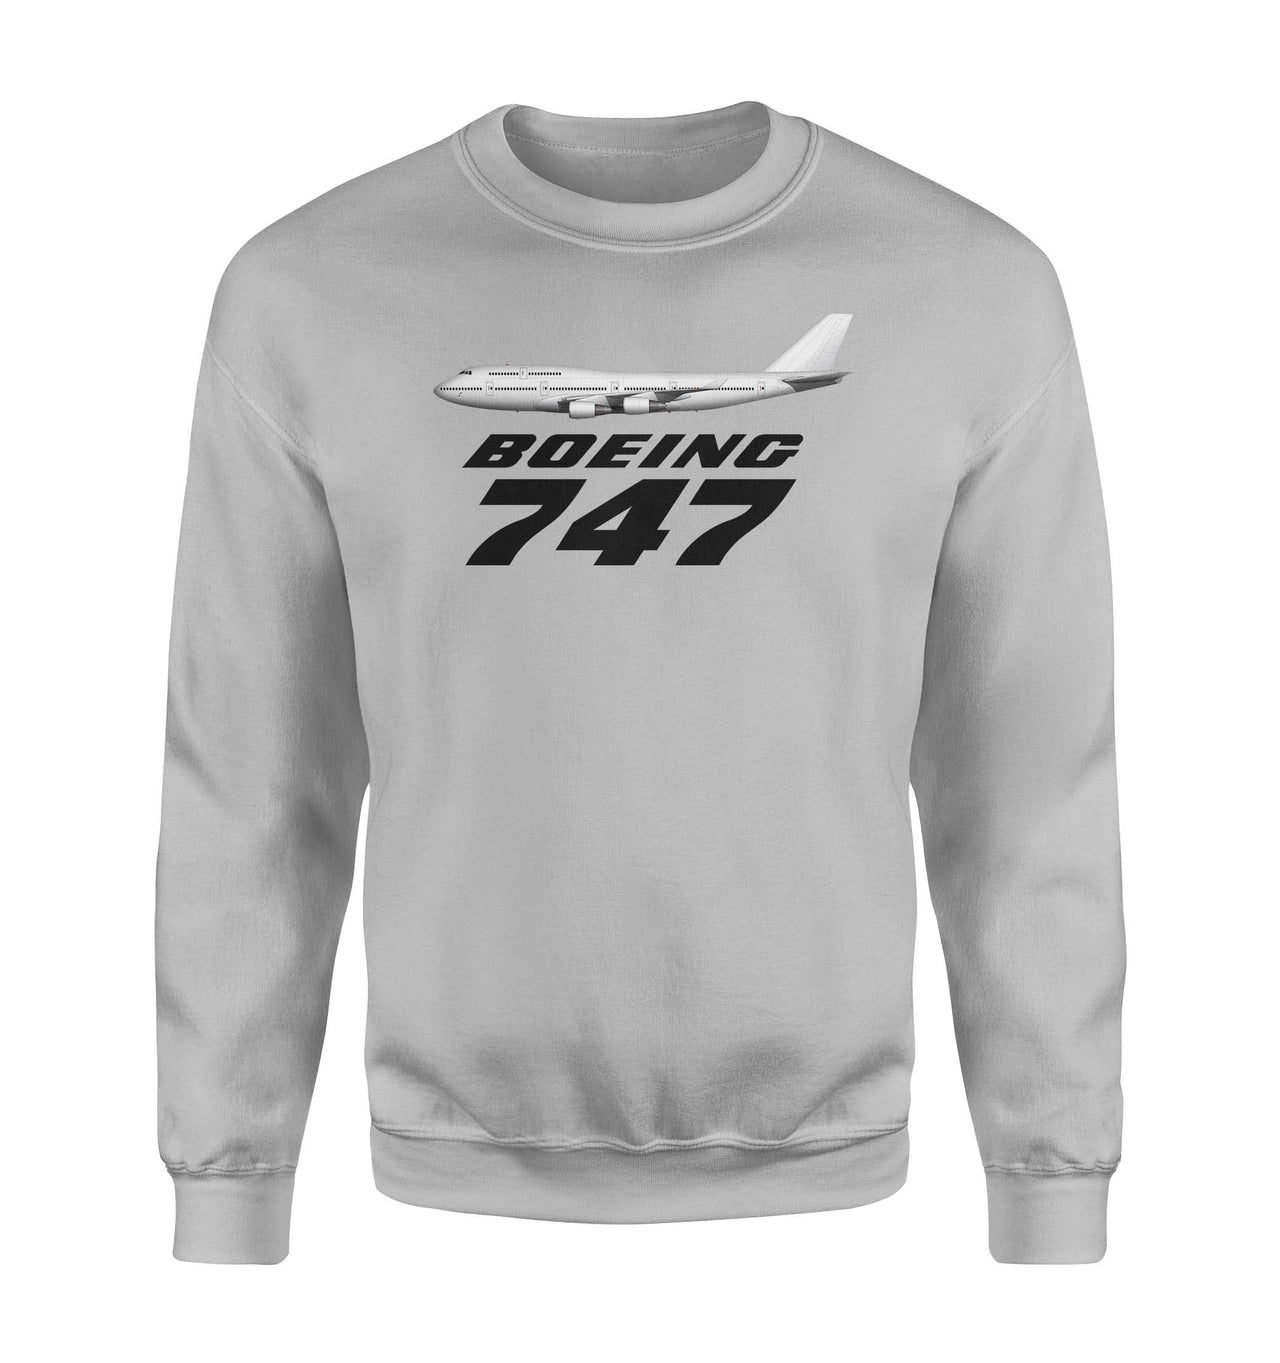 The Boeing 747 Designed Sweatshirts